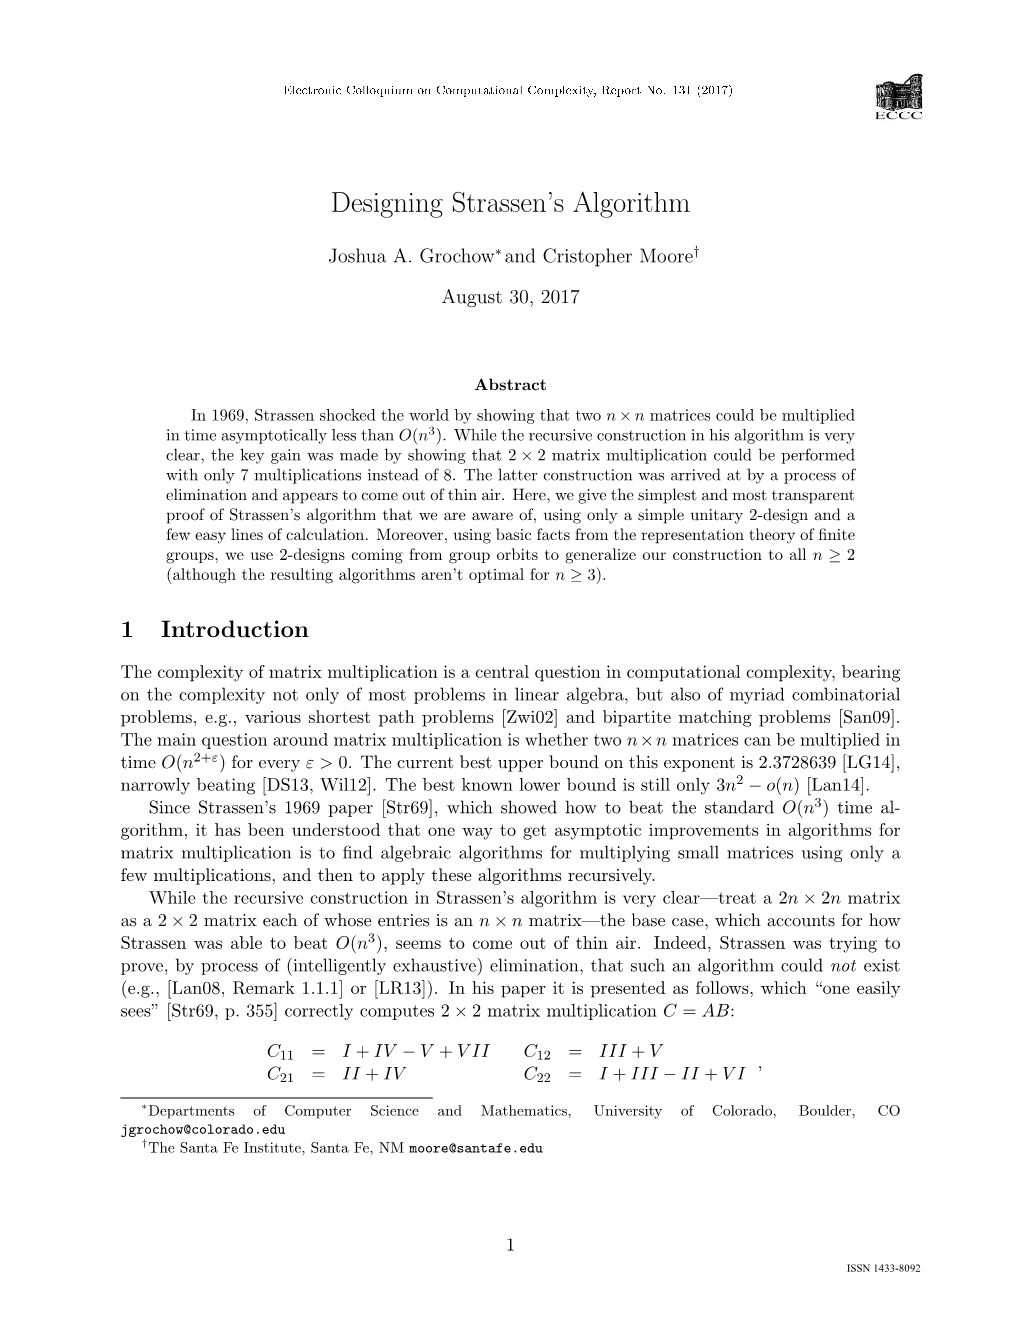 Designing Strassen's Algorithm